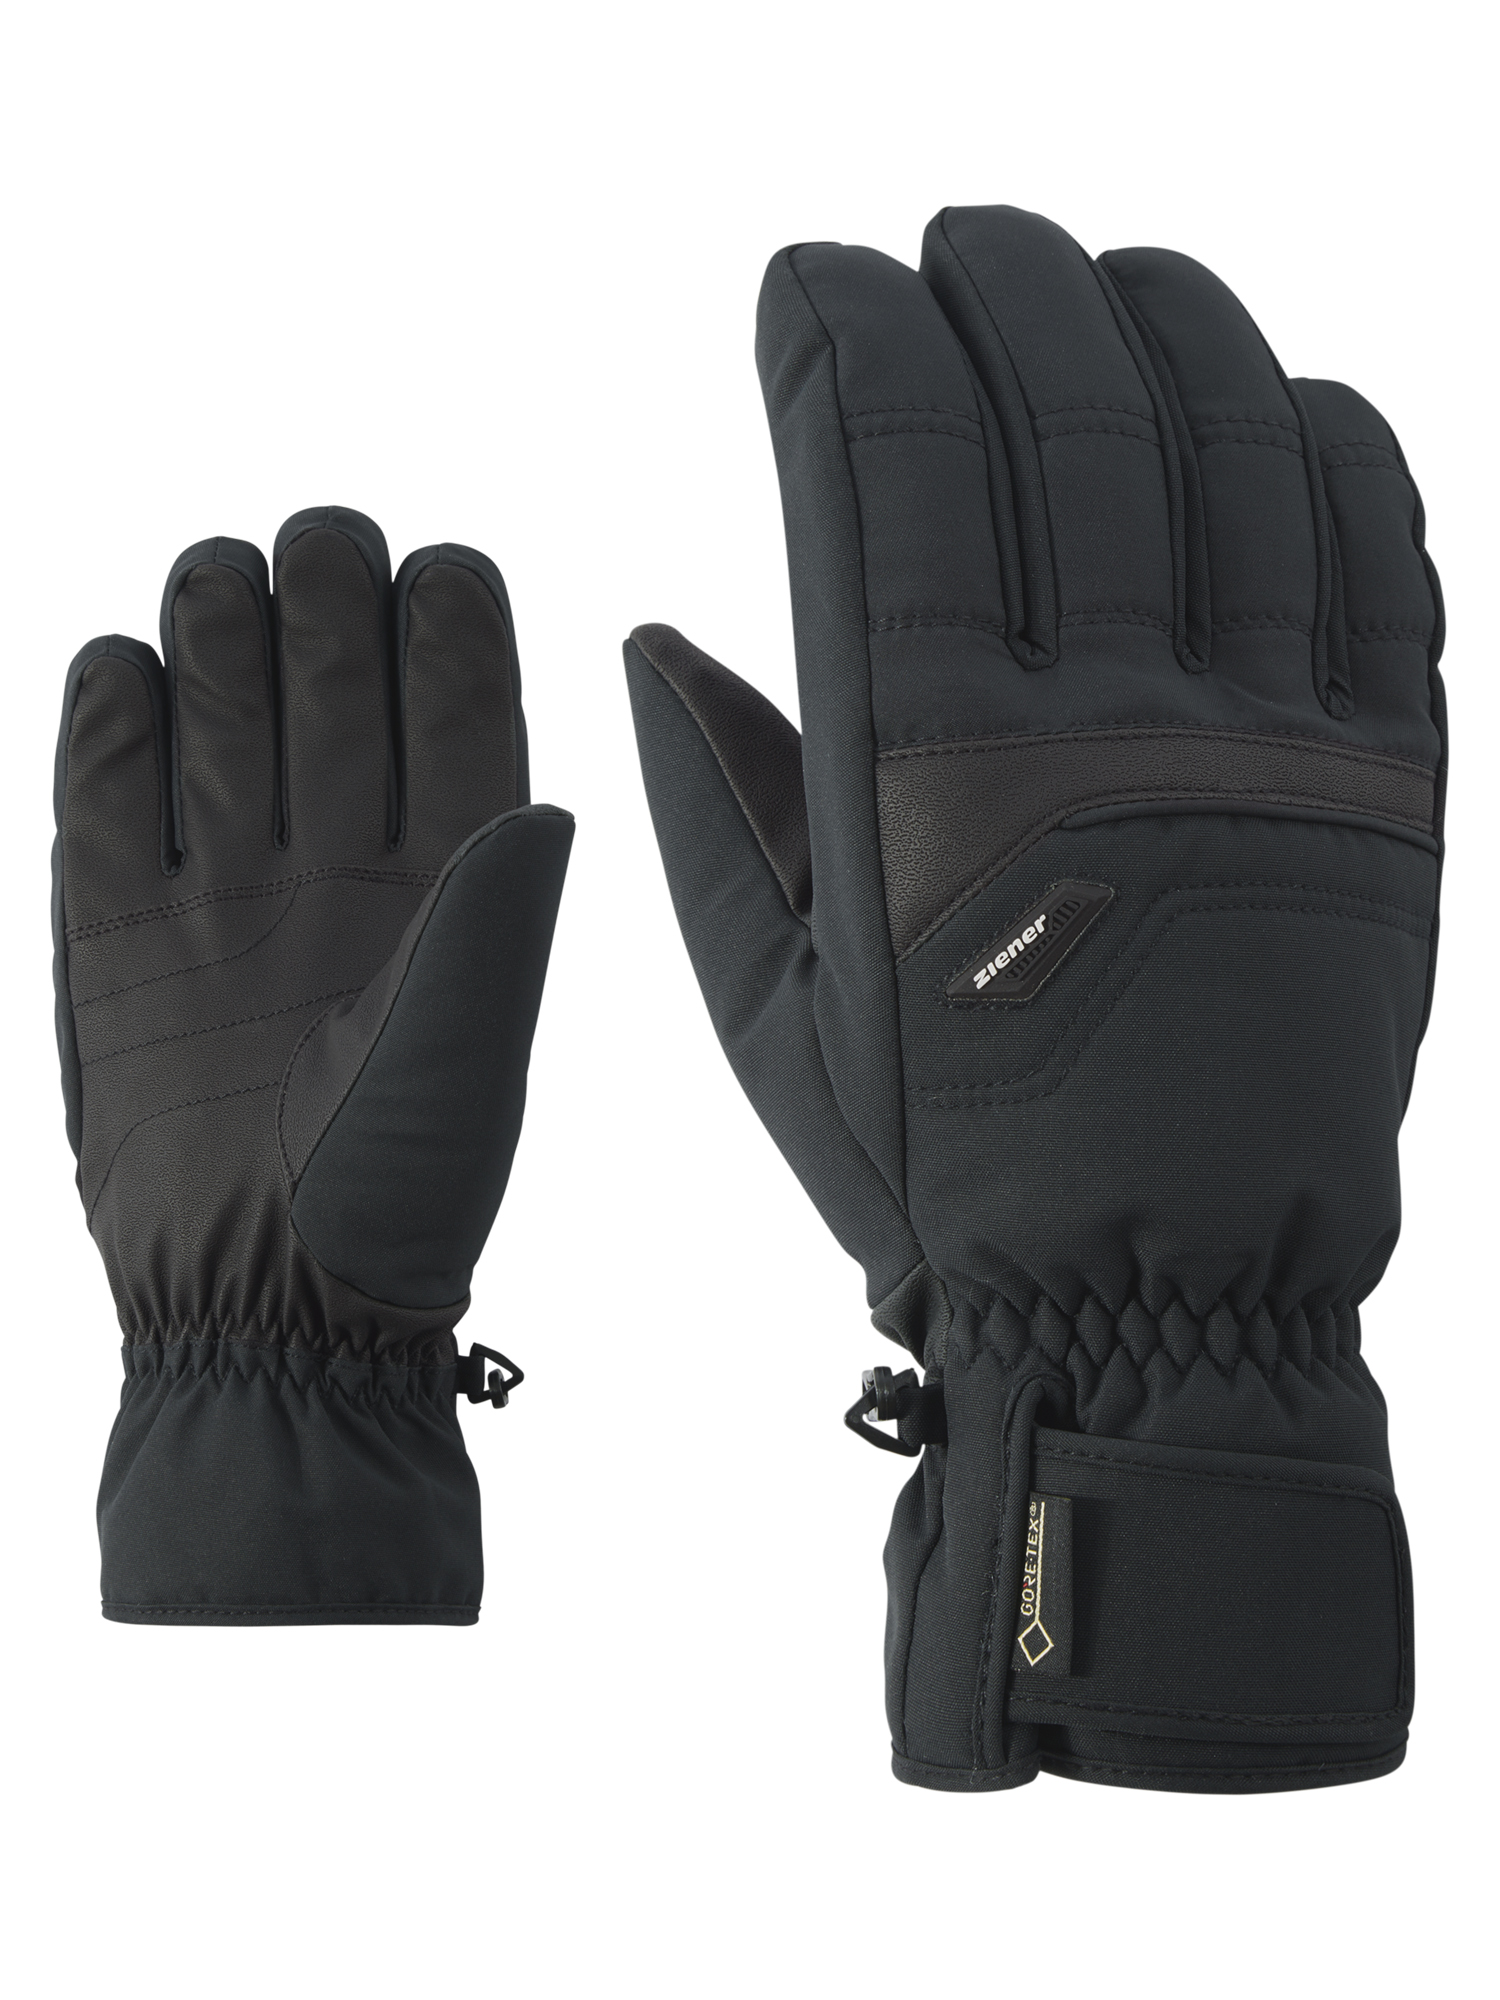 Ziener Glyn Gtx Gore Plus Warm Glove